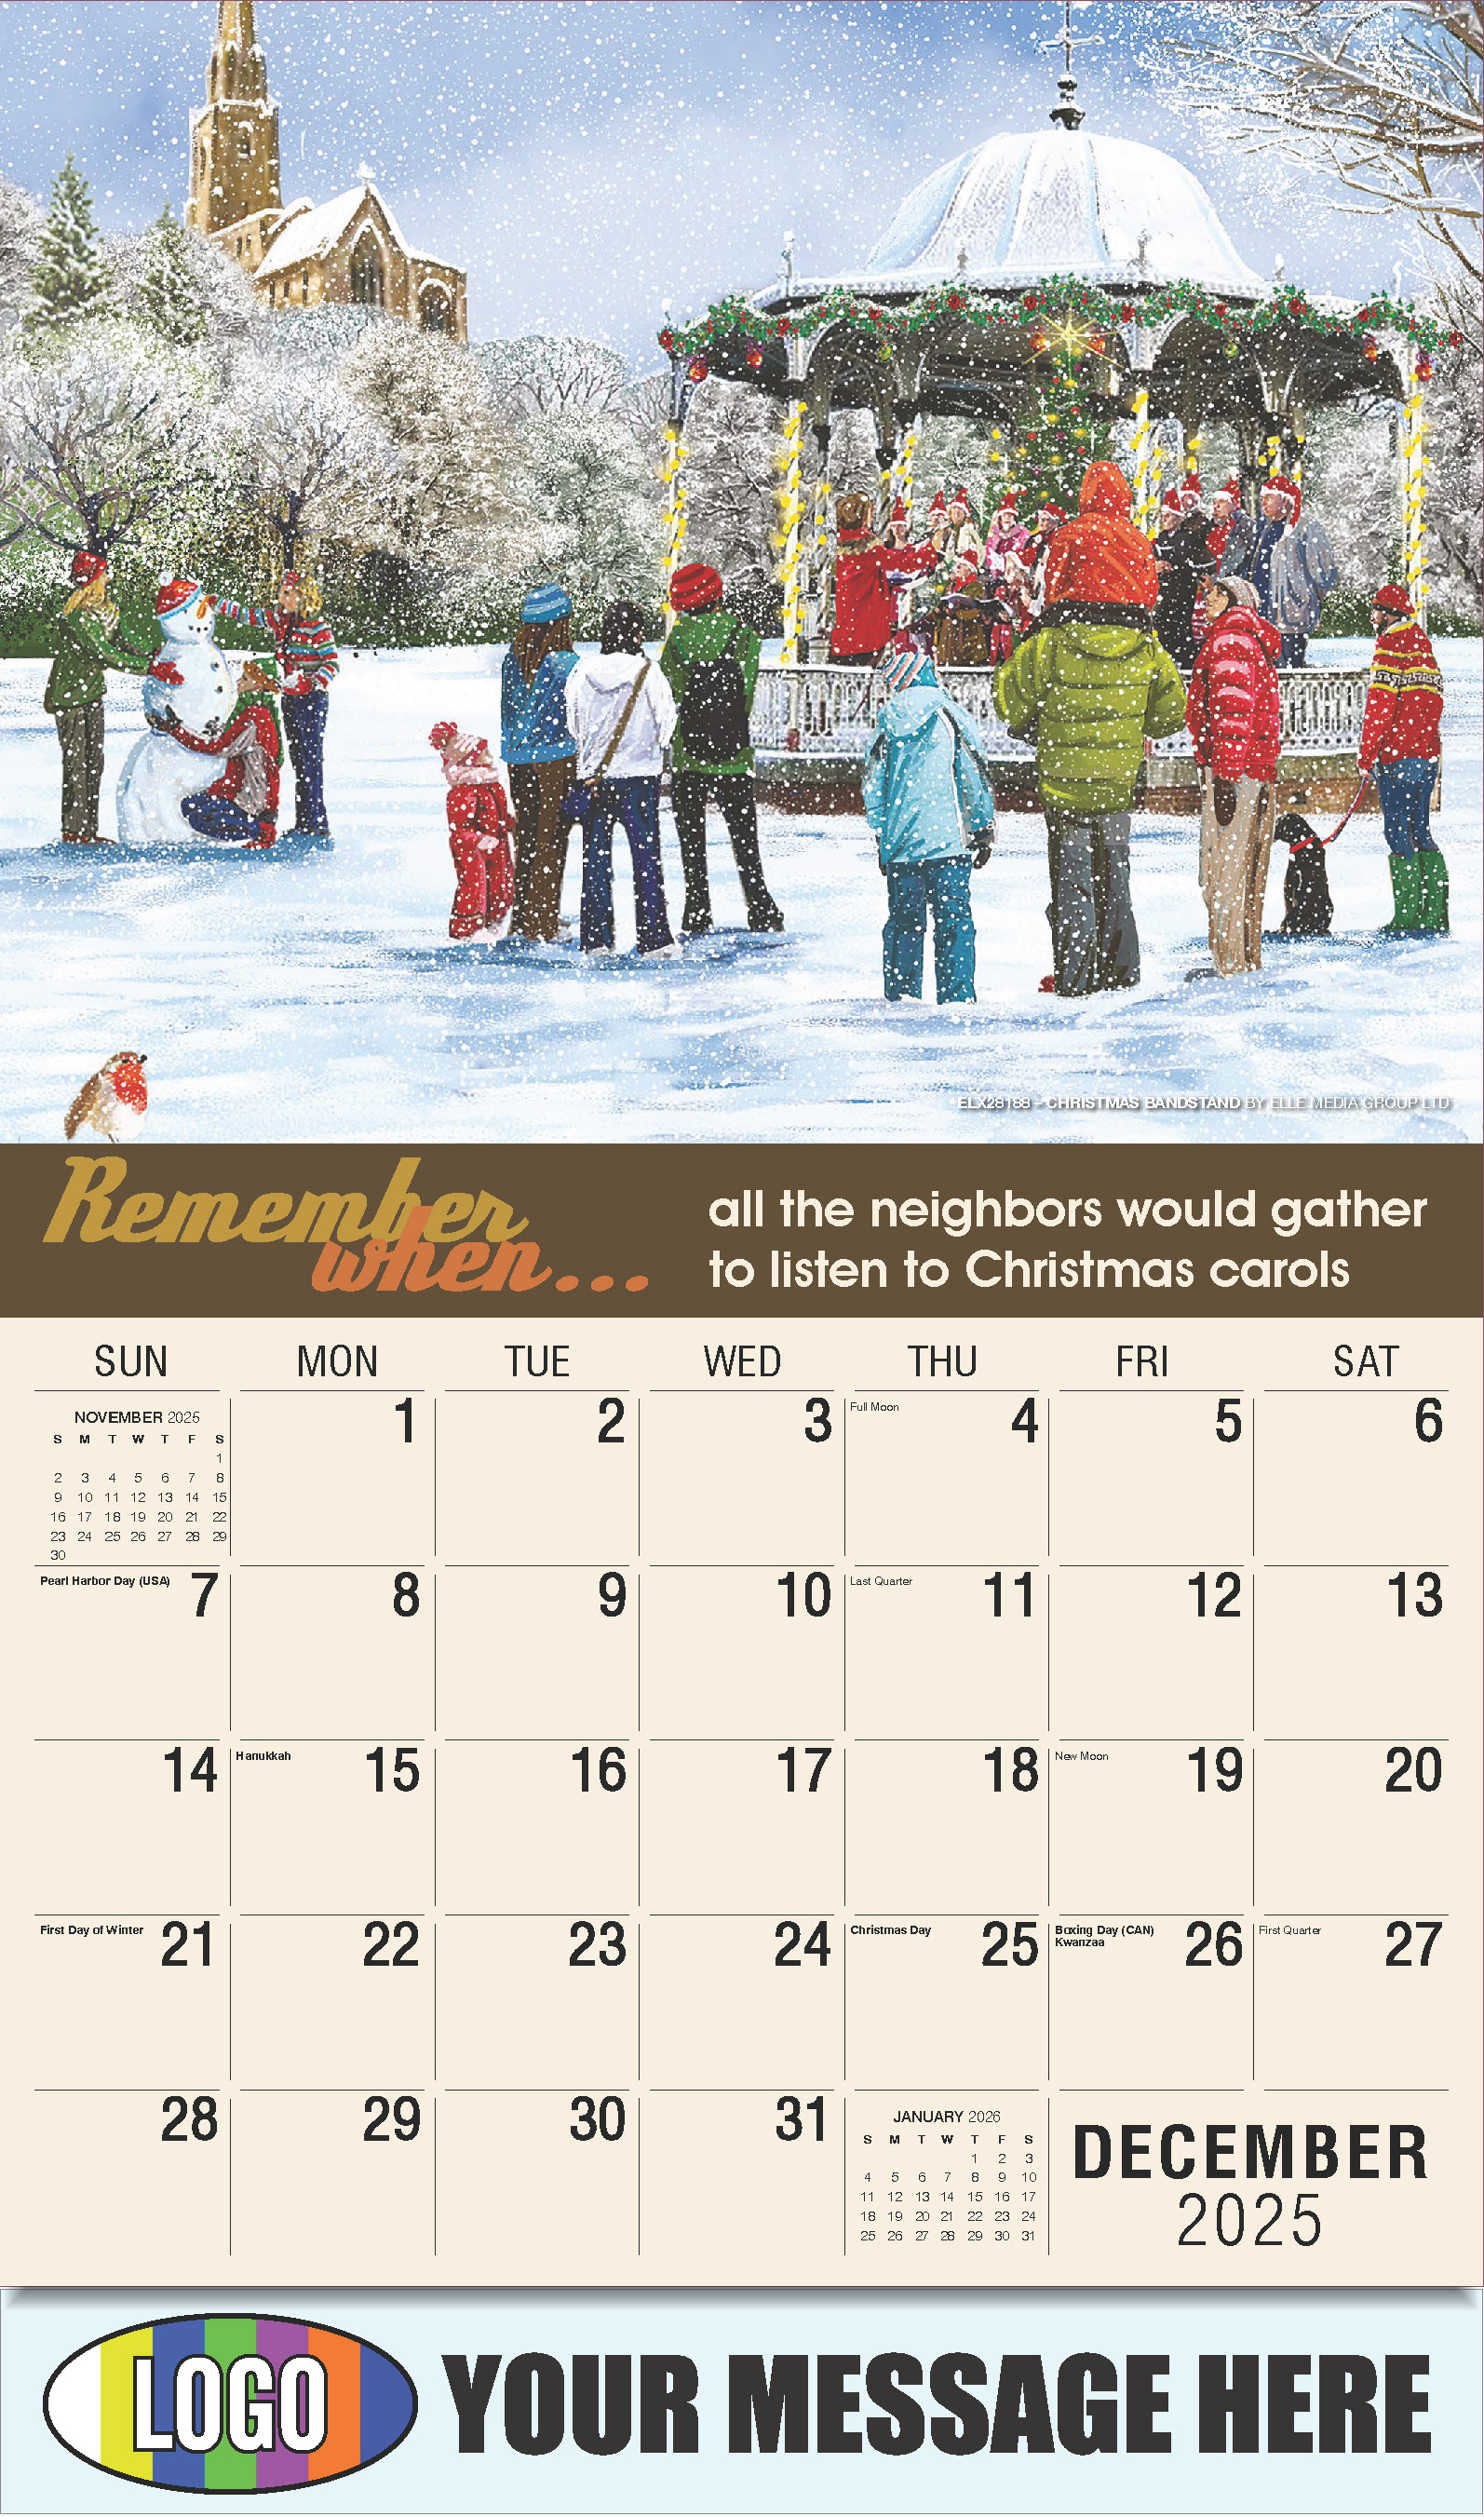 Remember When 2025 Business Advertising Calendar - December